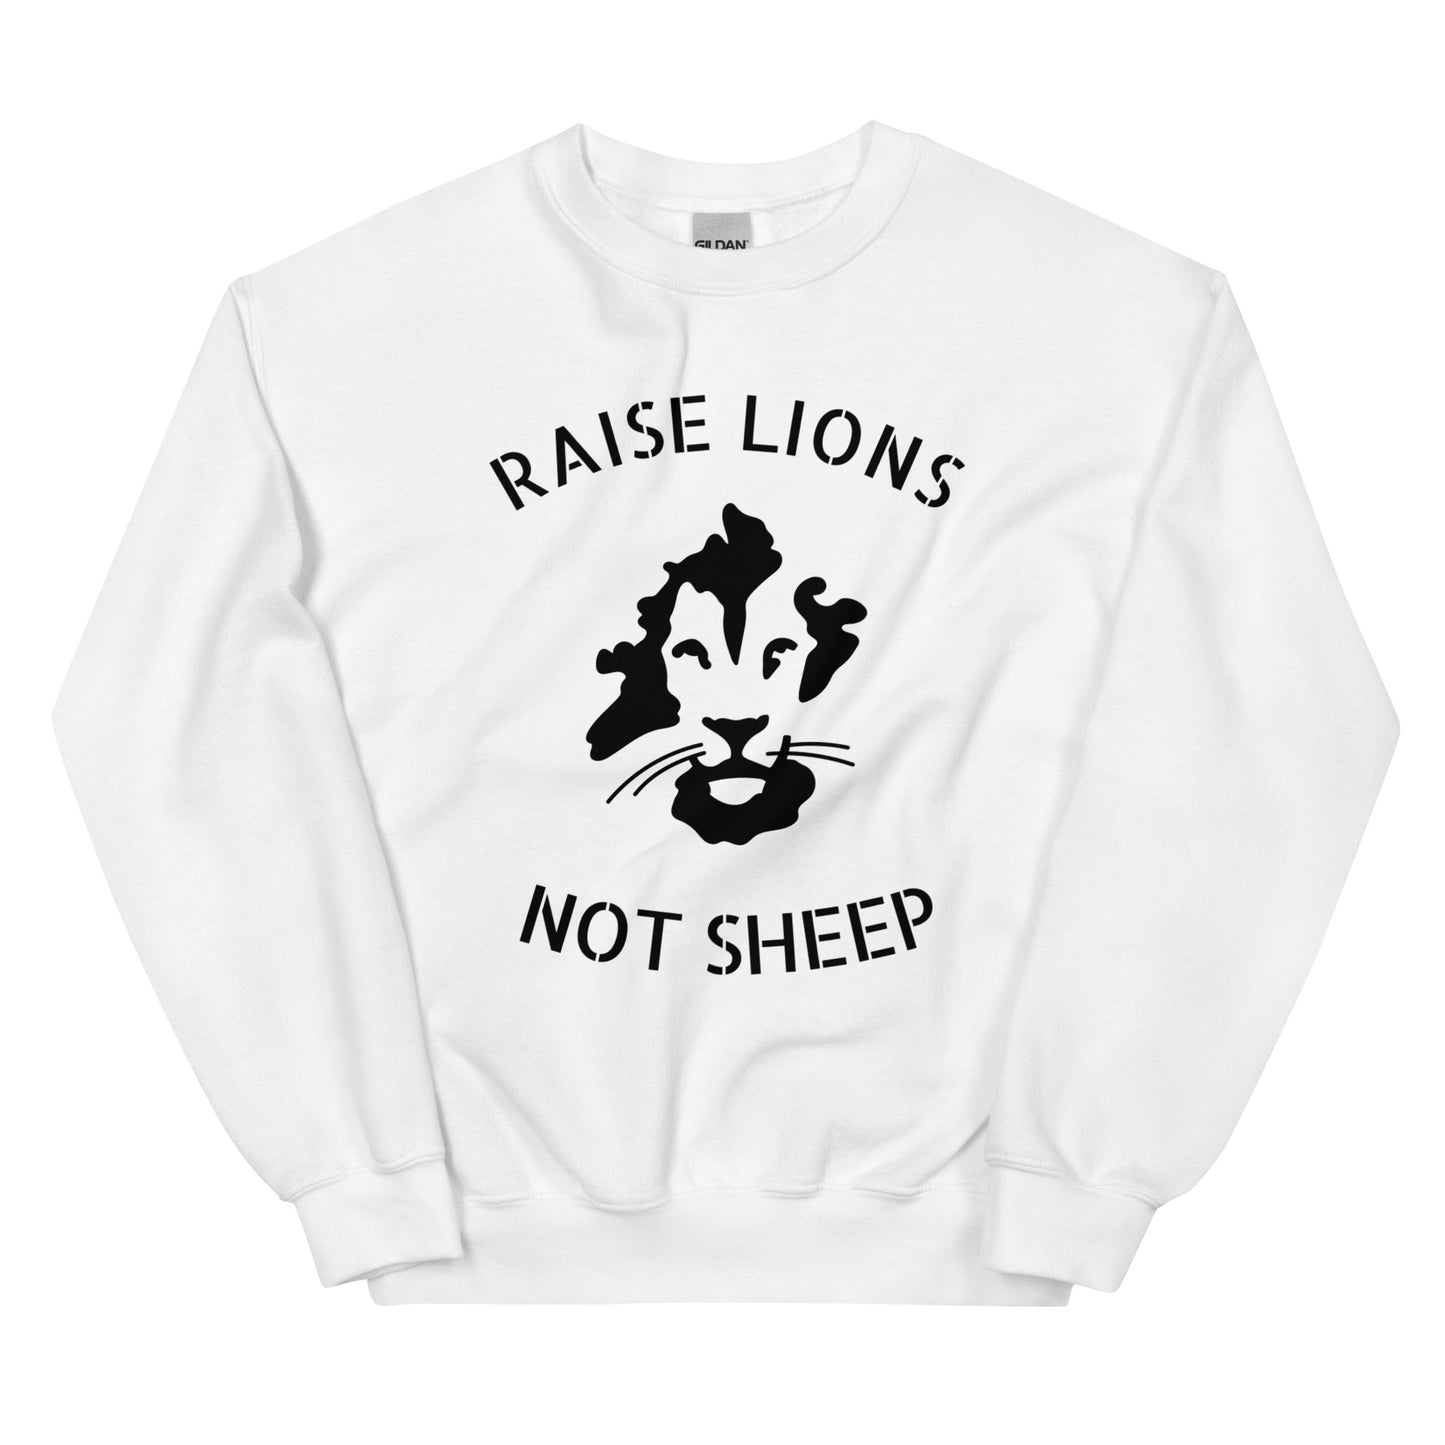 Raise Lions Not Sheepo Unisex Crew Neck Sweatshirt